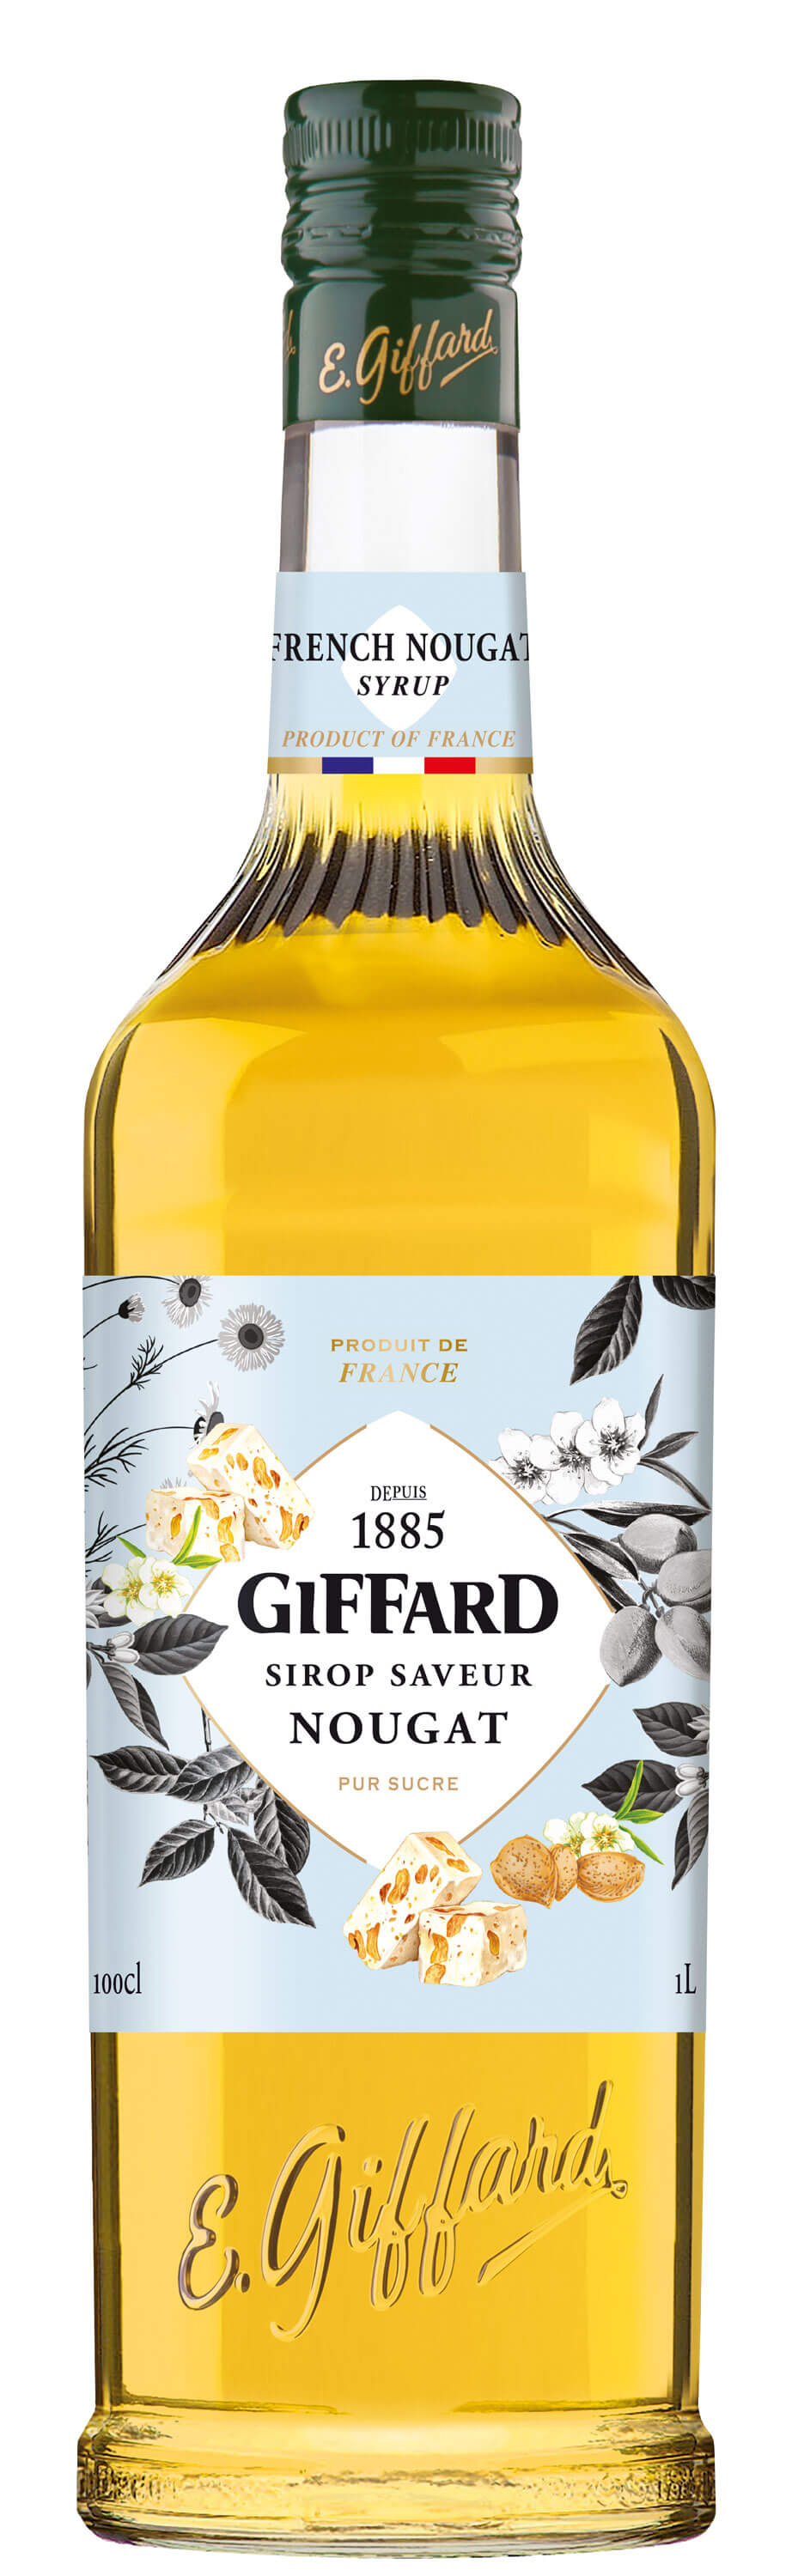 French Nougat - Giffard Syrup (1,0l)